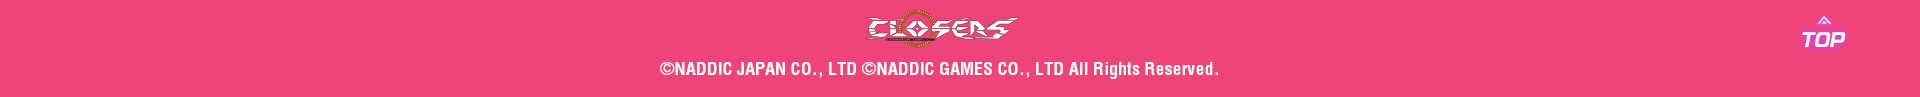 Naddic Japan Co.,Ltd Naddic Games Co.,Ltd All rights reserved.